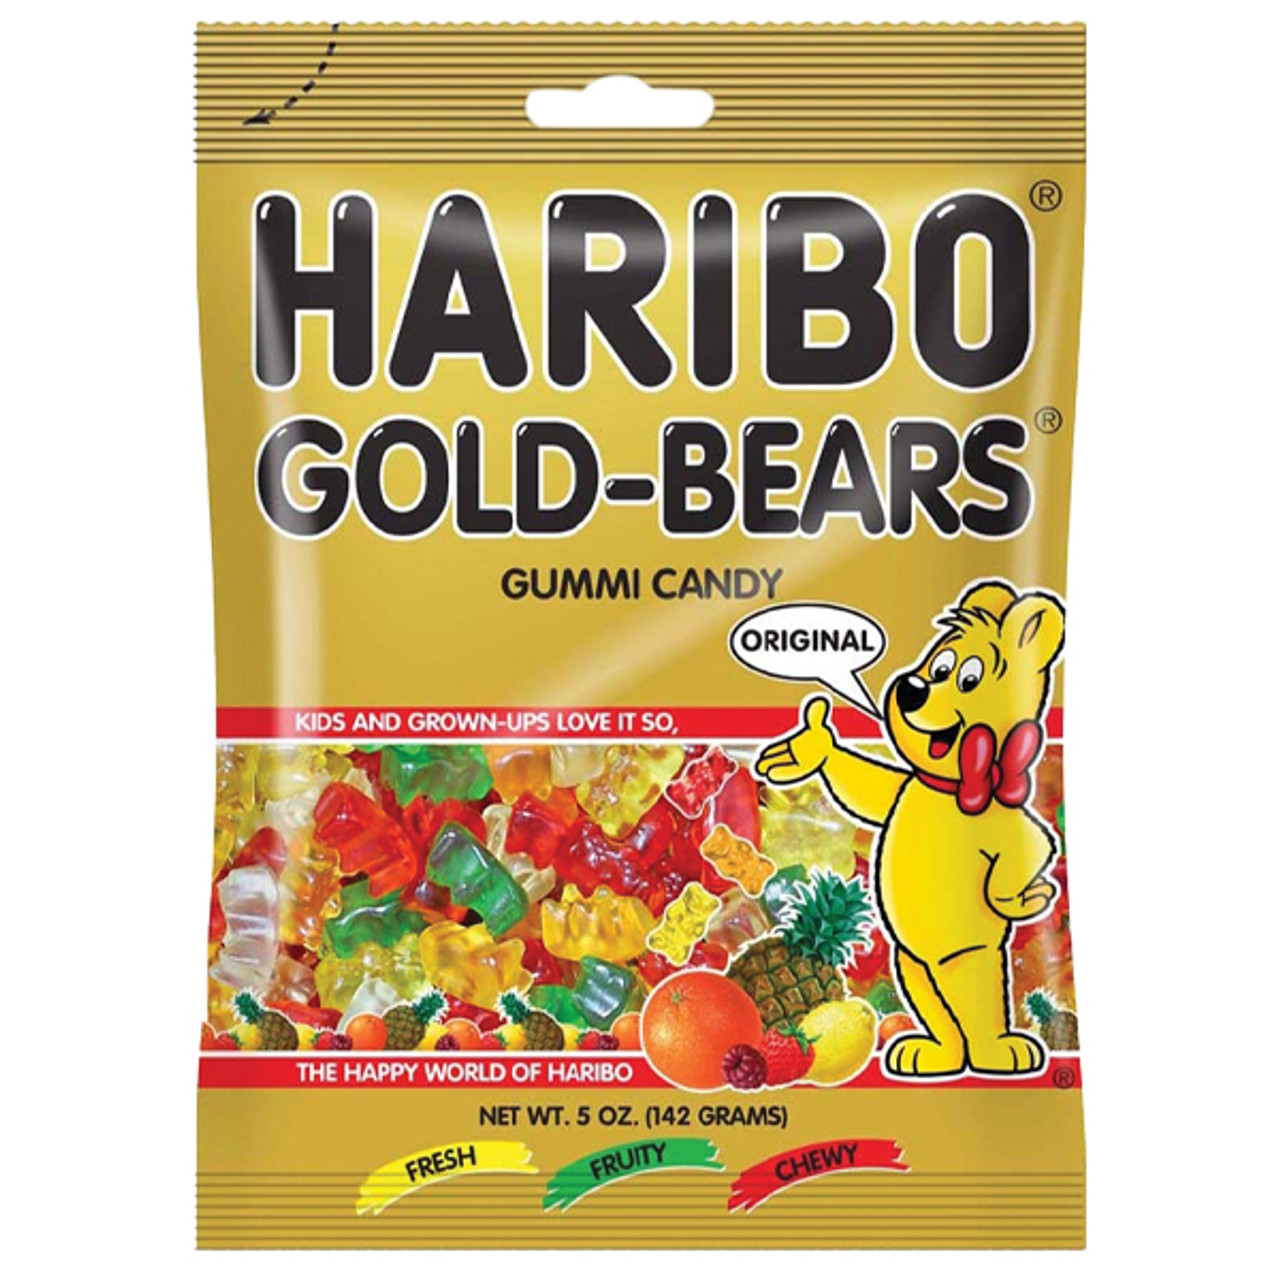 Haribo Goldbears, Worldwide delivery